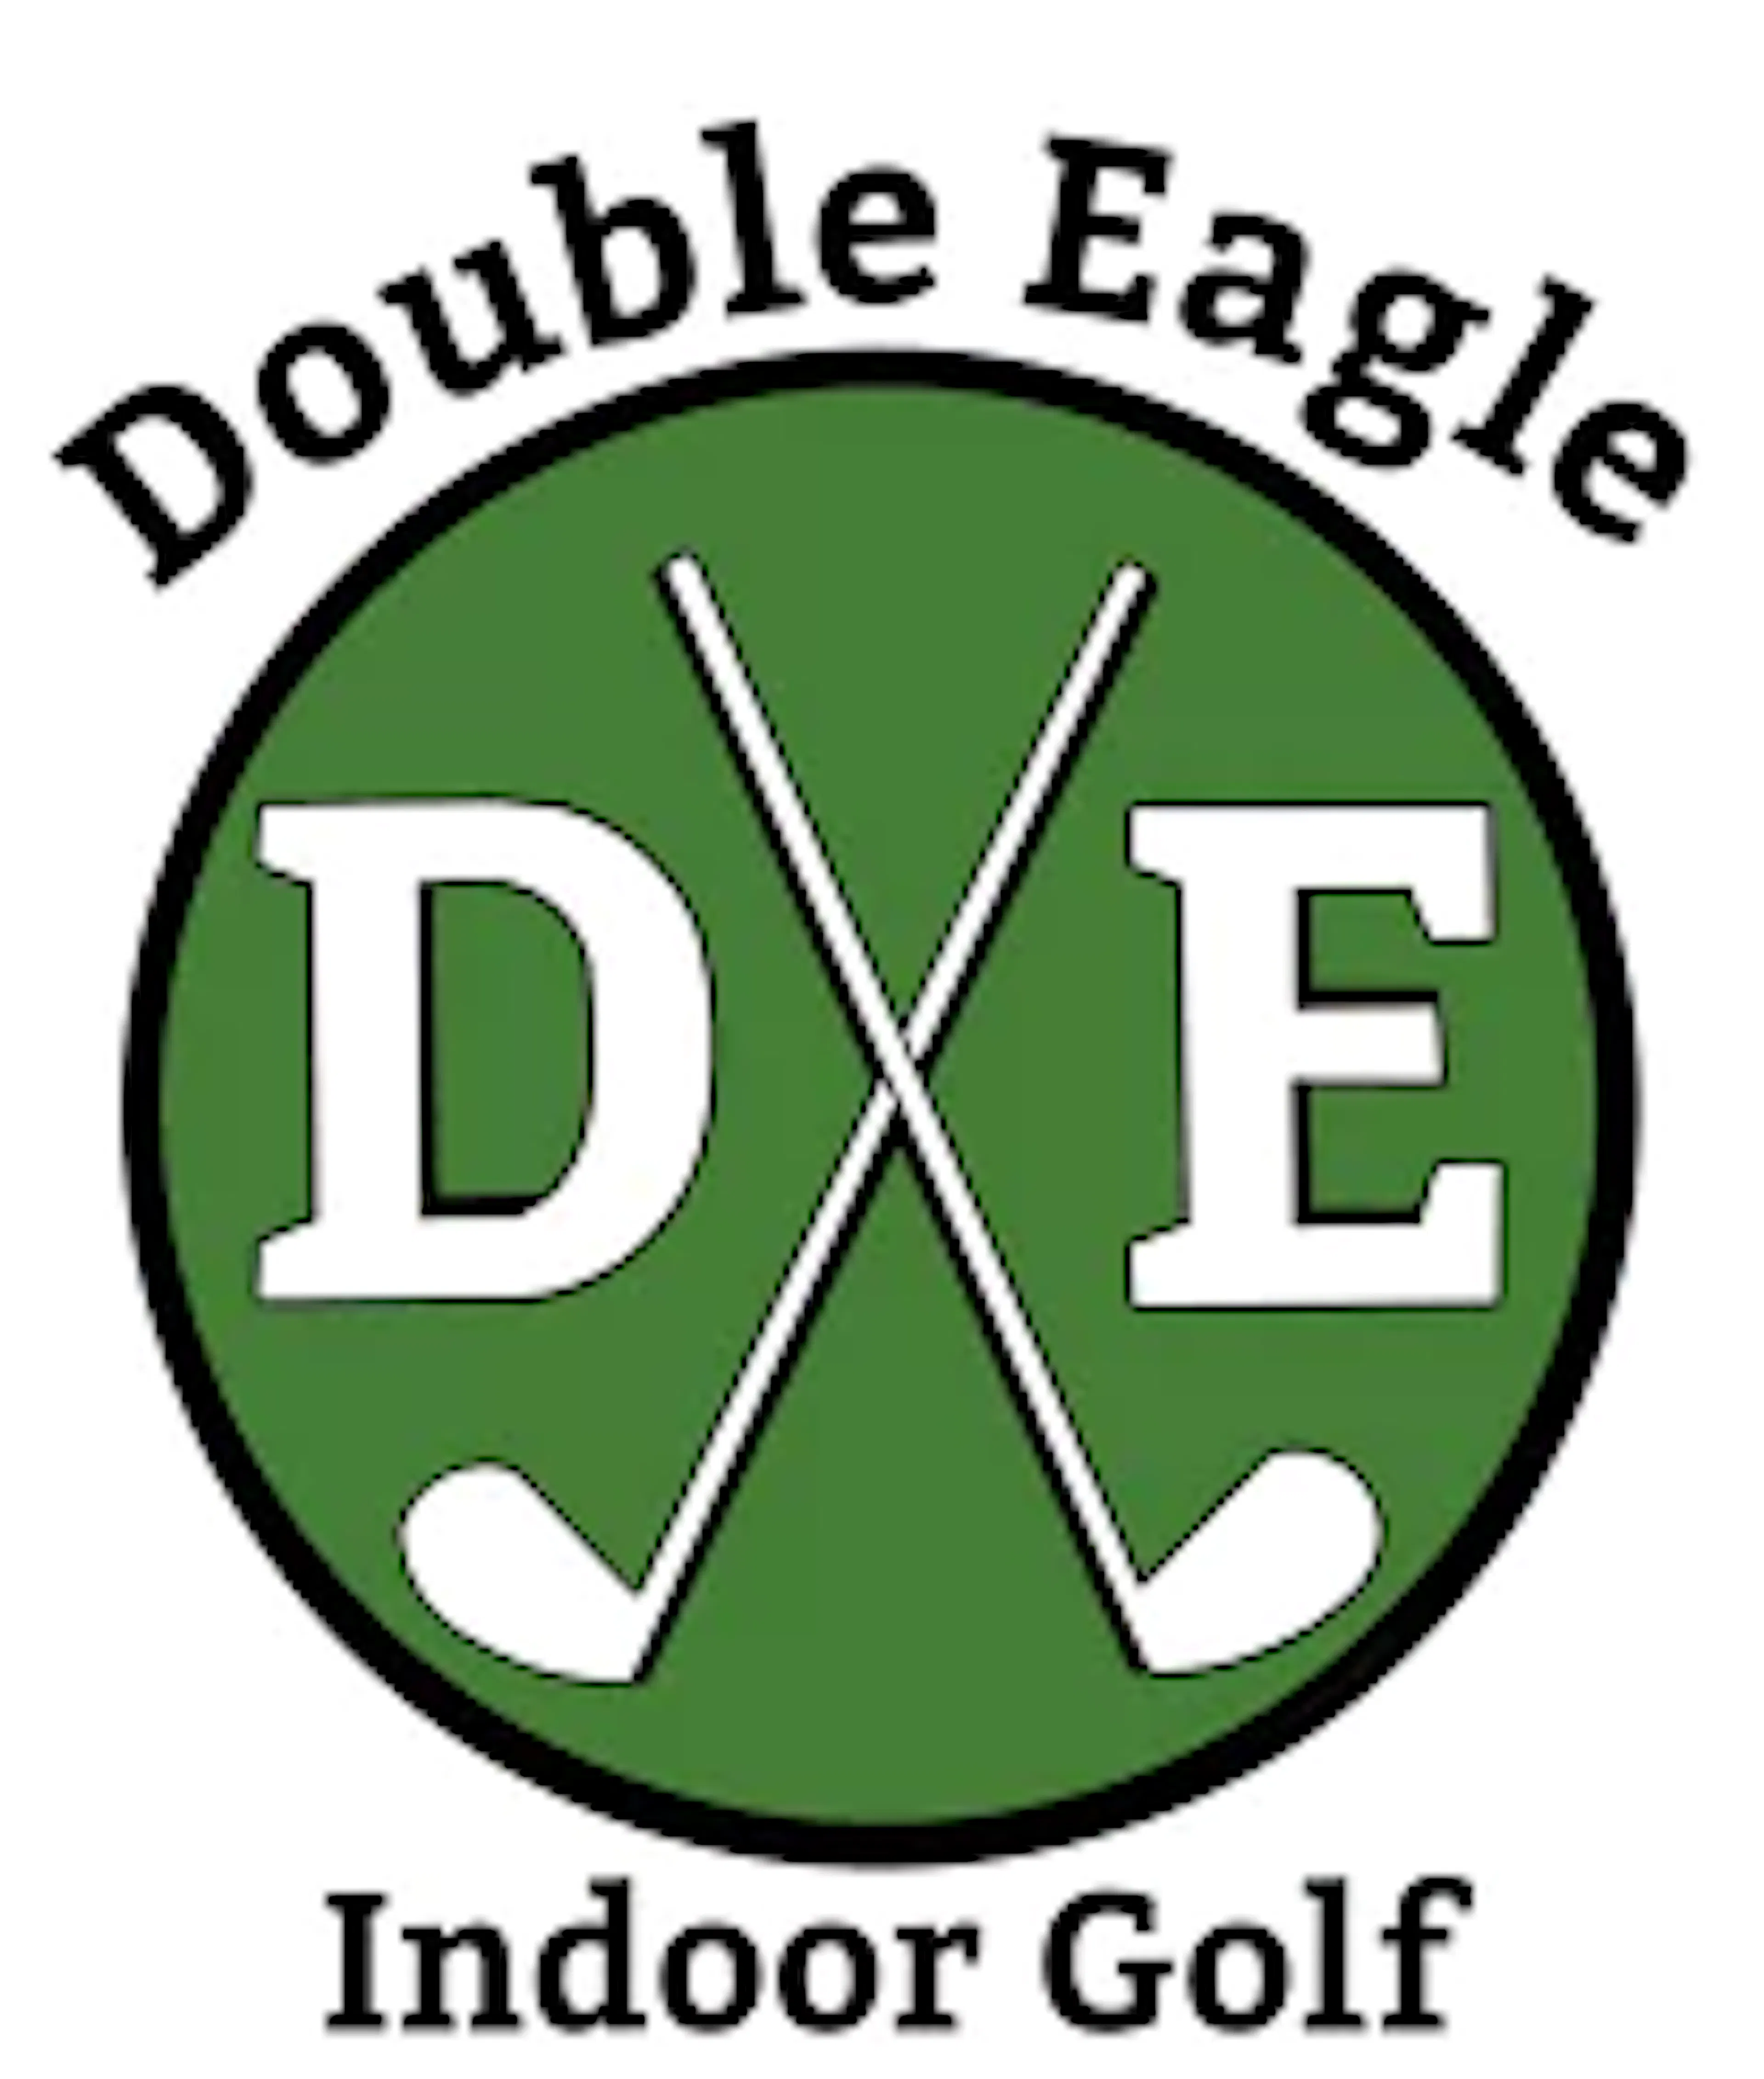 double eagle indoor golf